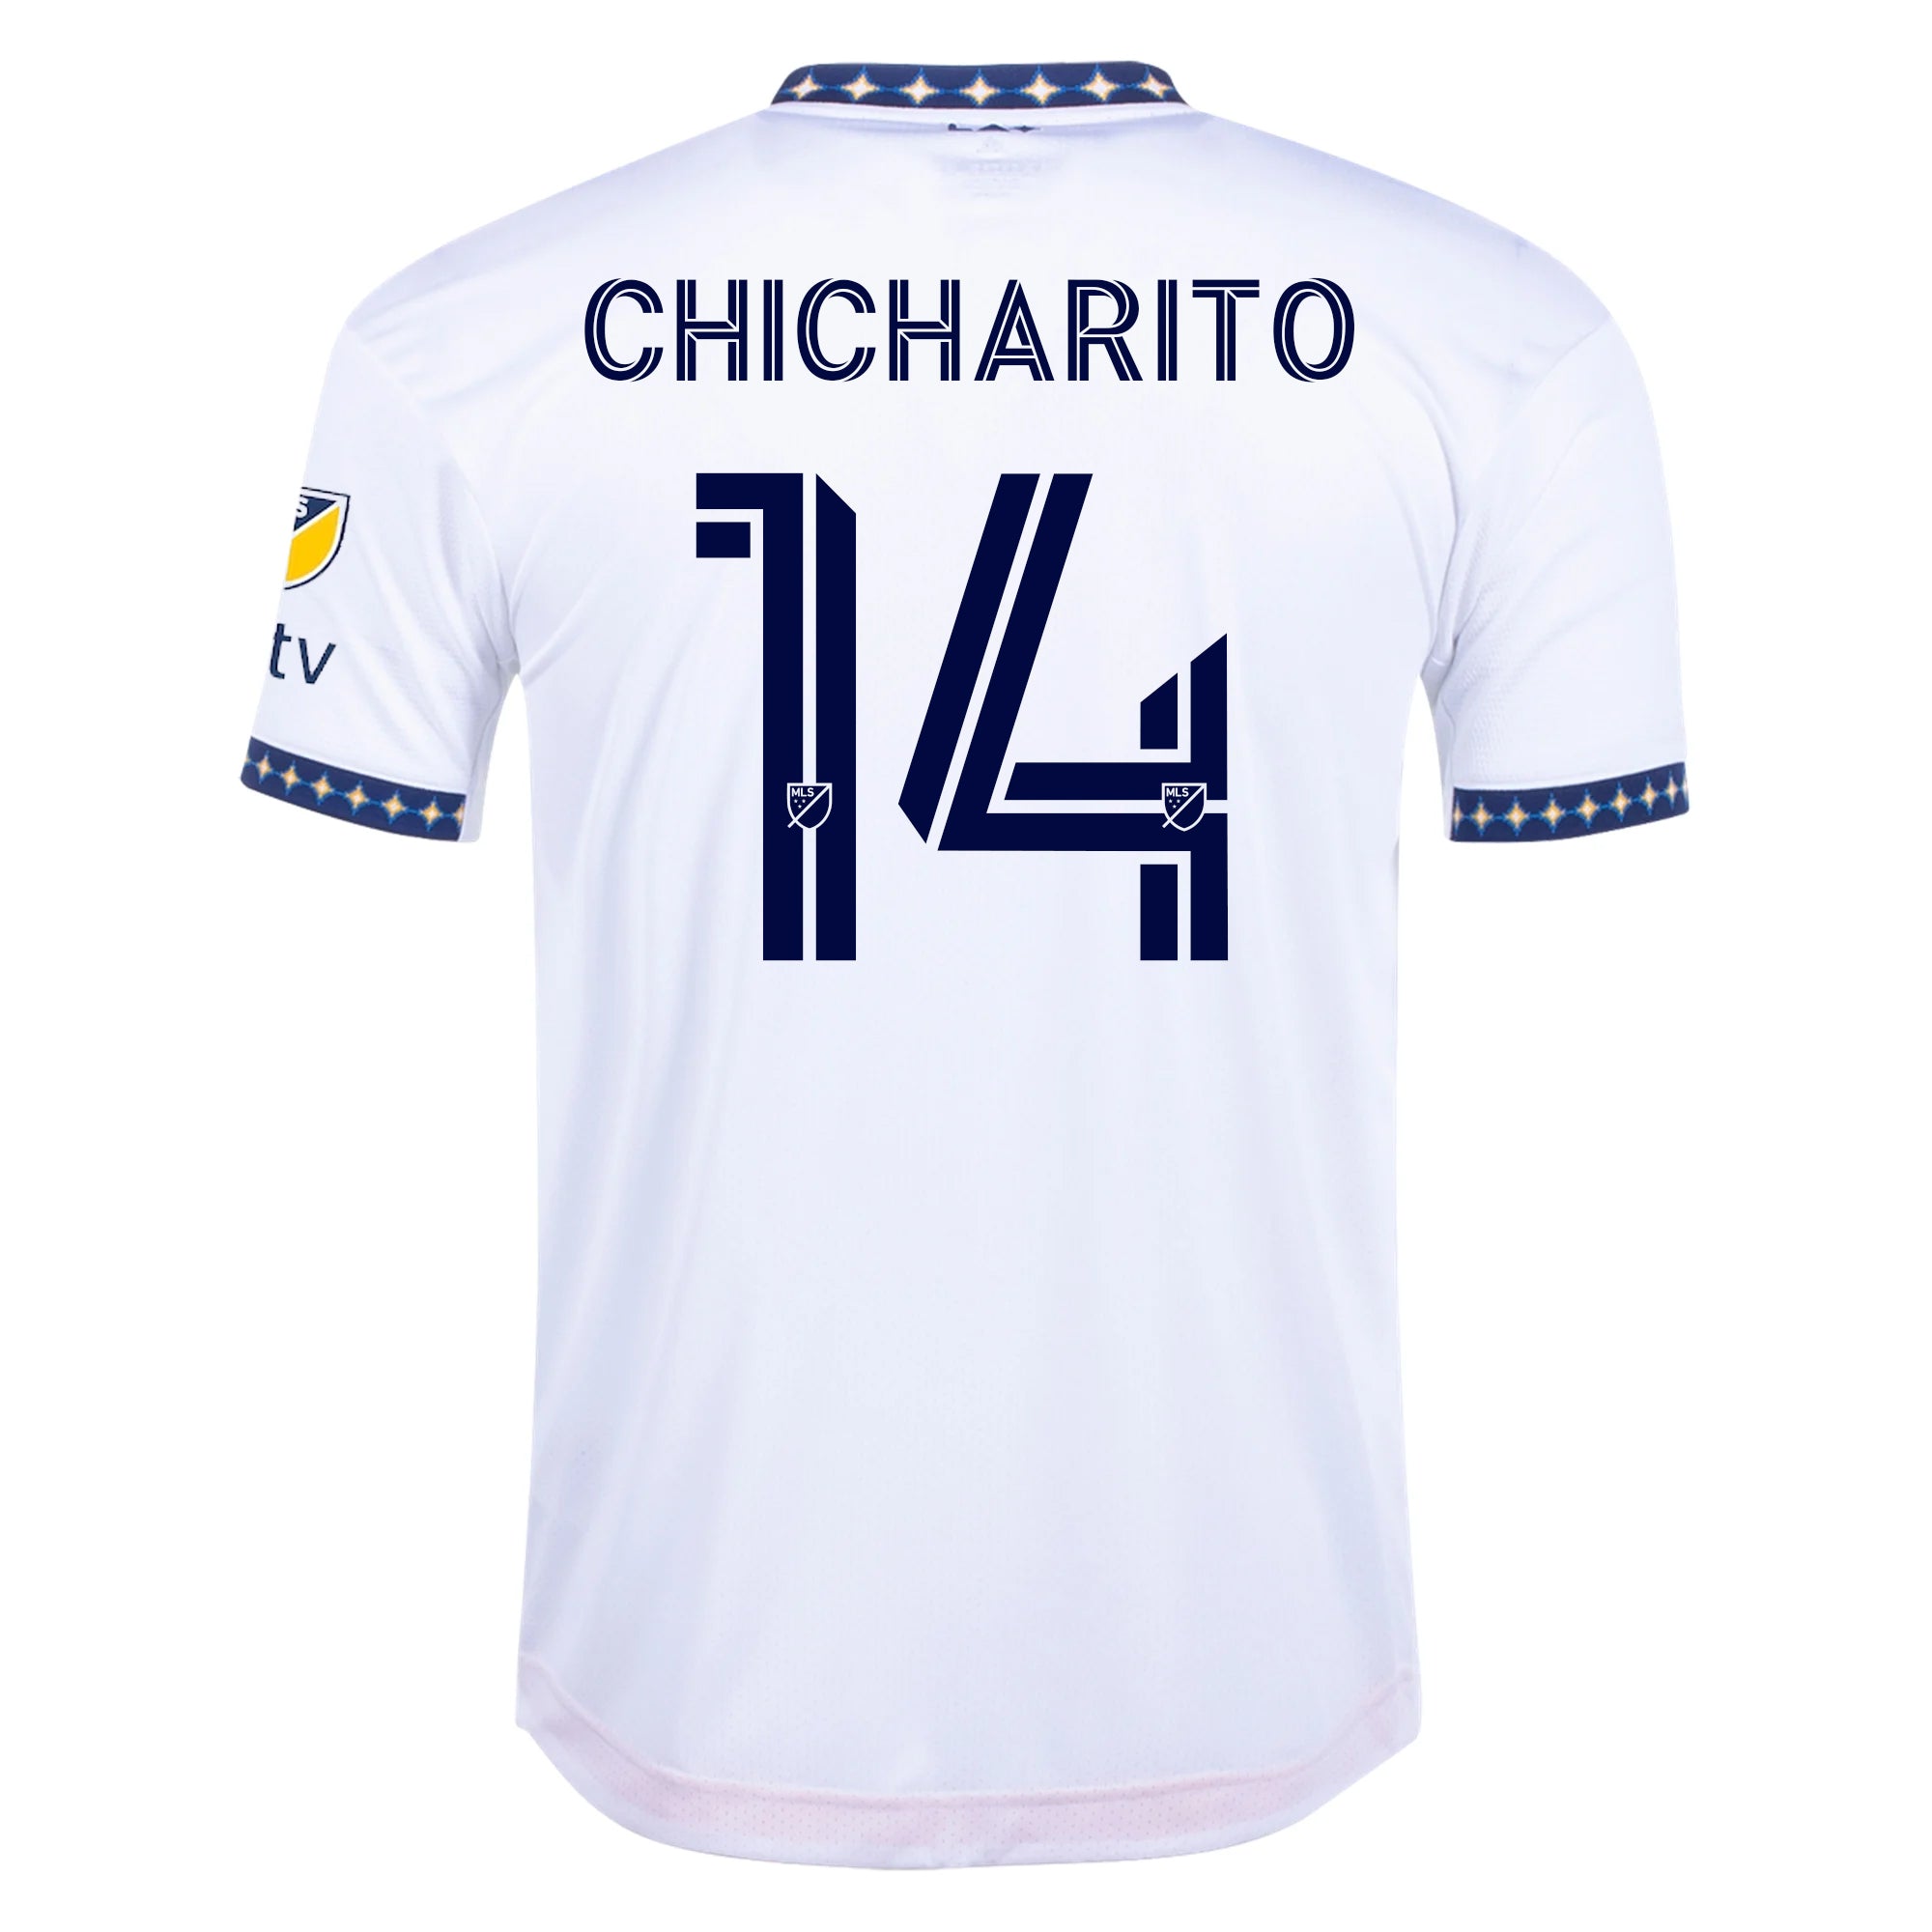 Adidas Chicharito La Galaxy Home Authentic Jersey 22/23 w/ MLS Patches (White) Size L